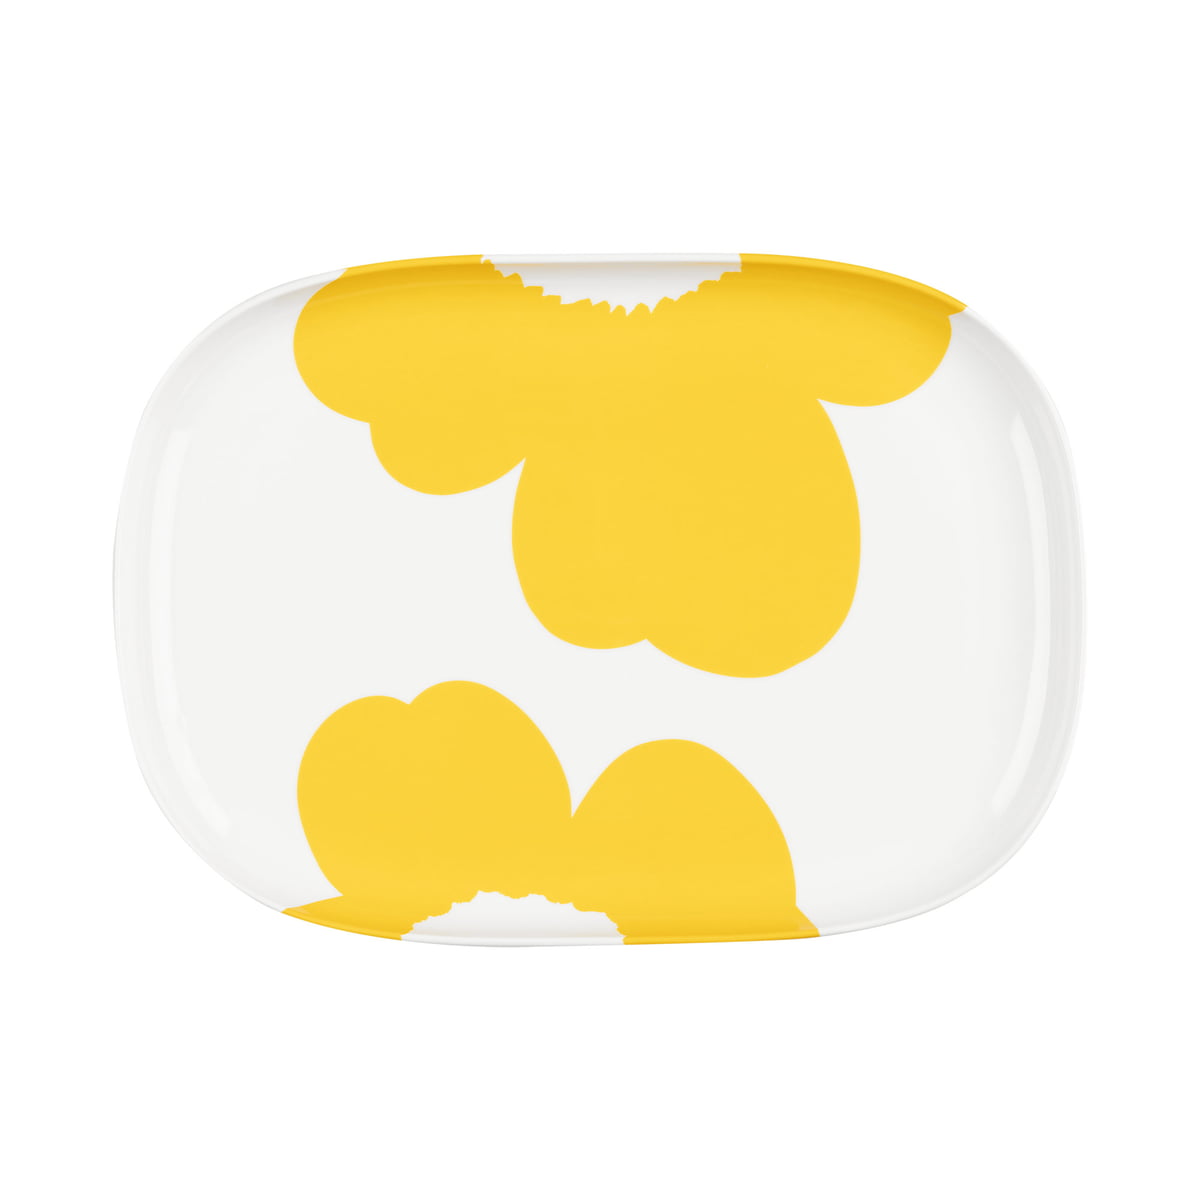 marimekko - oiva iso unikko plateau de service, 25 x 36 cm, blanc / spring yellow